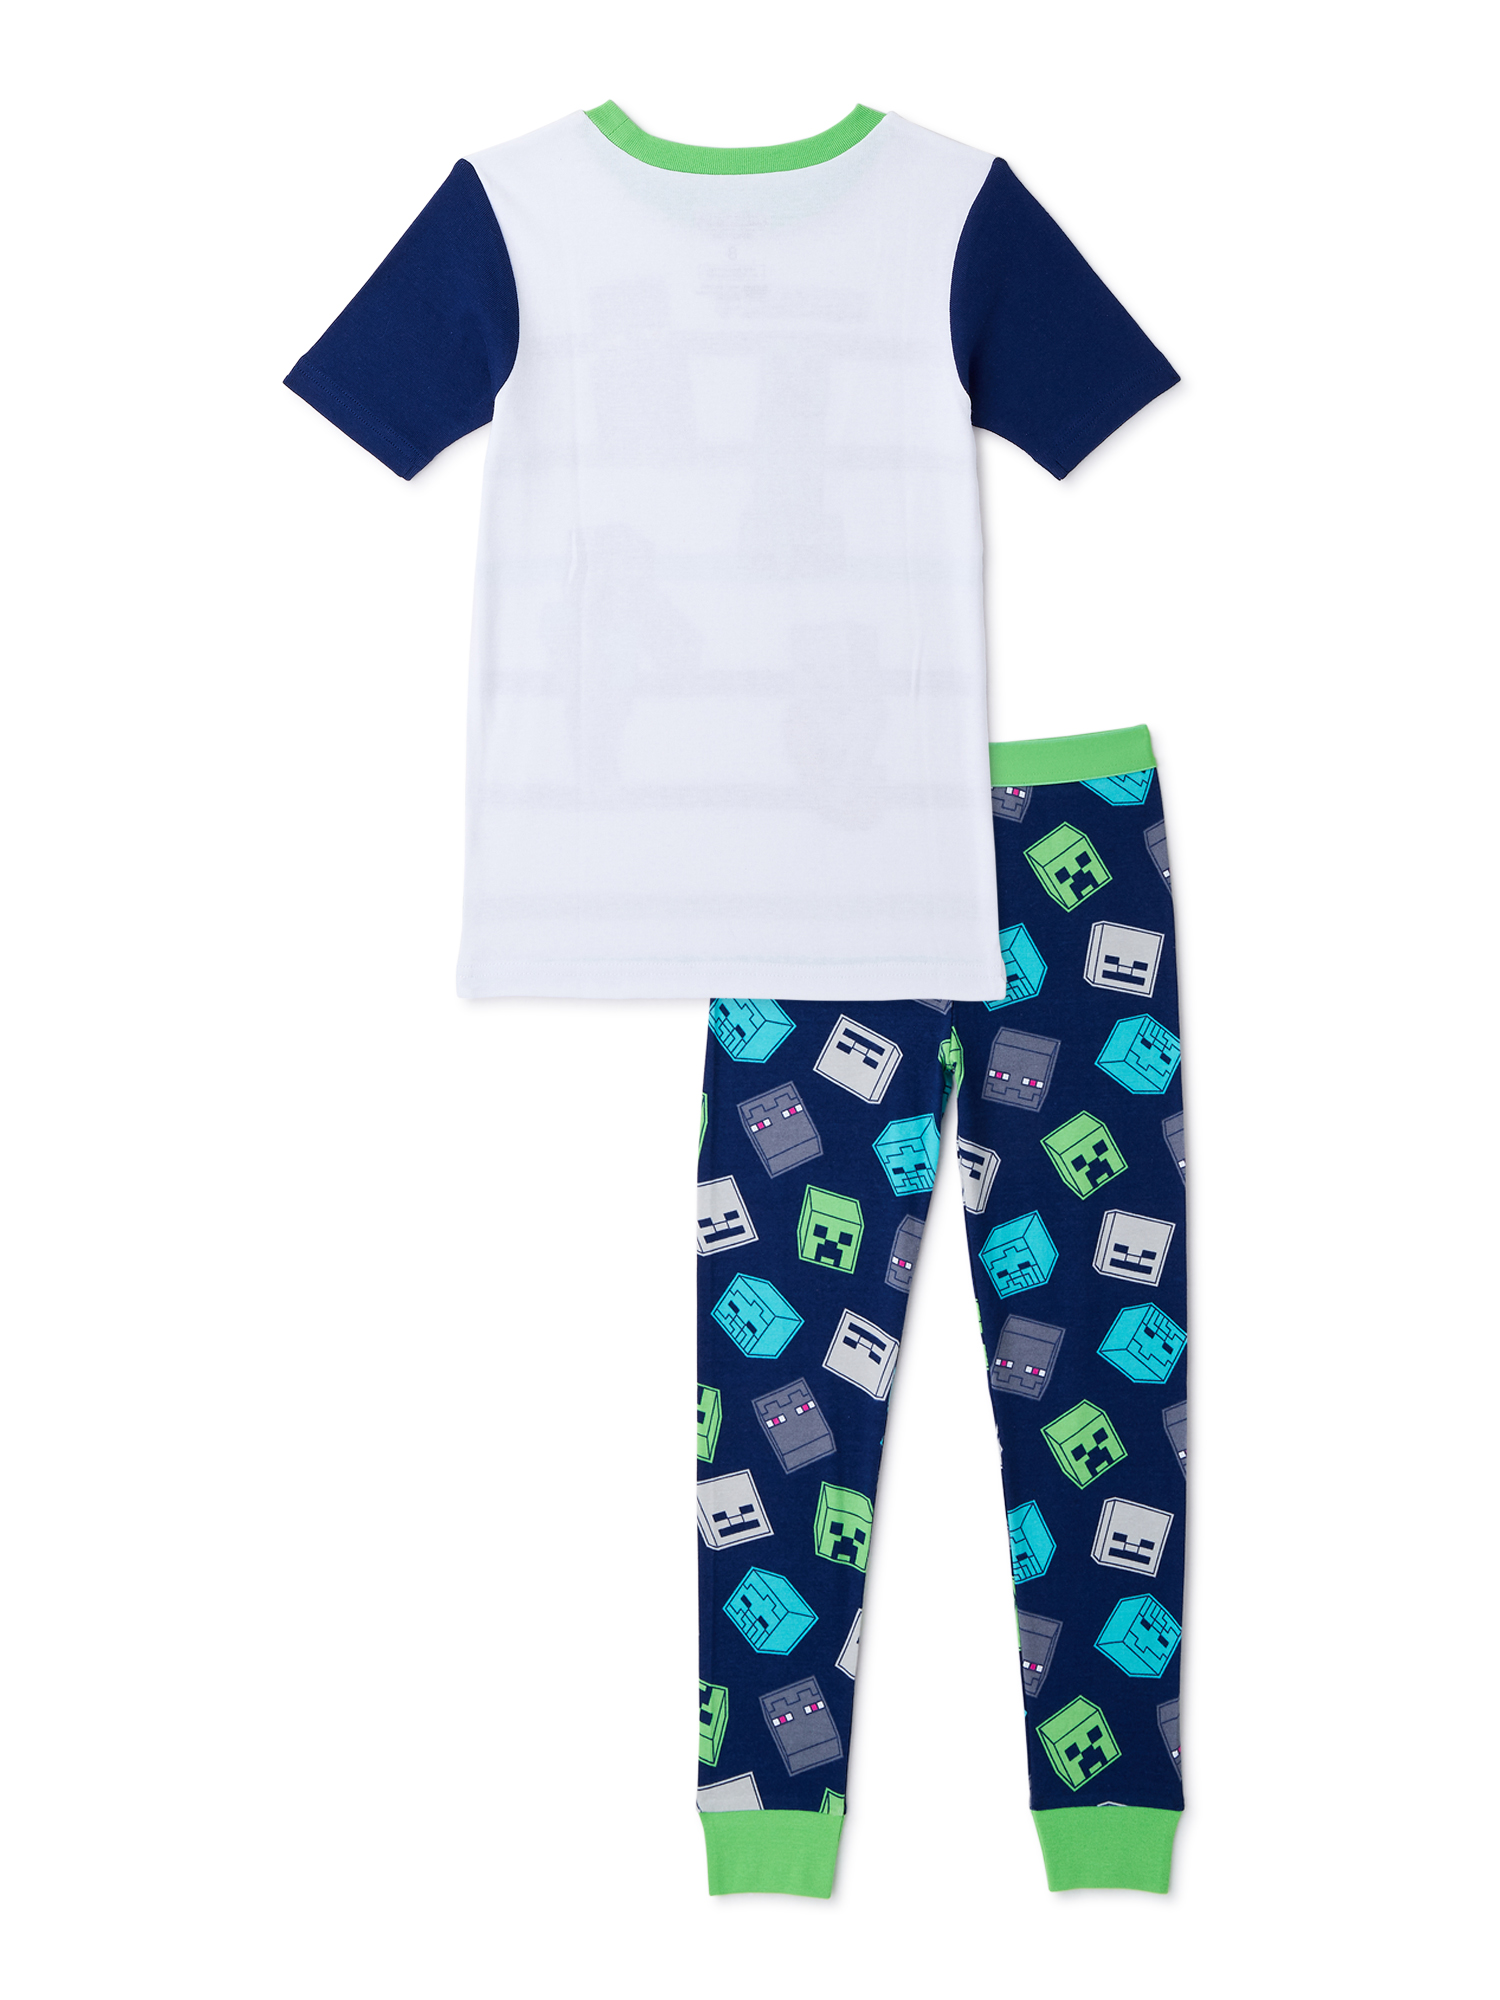 Minecraft Short Sleeve Crew Neck Graphic Prints Pajamas (Little Boys) 2 Piece Set - image 3 of 3